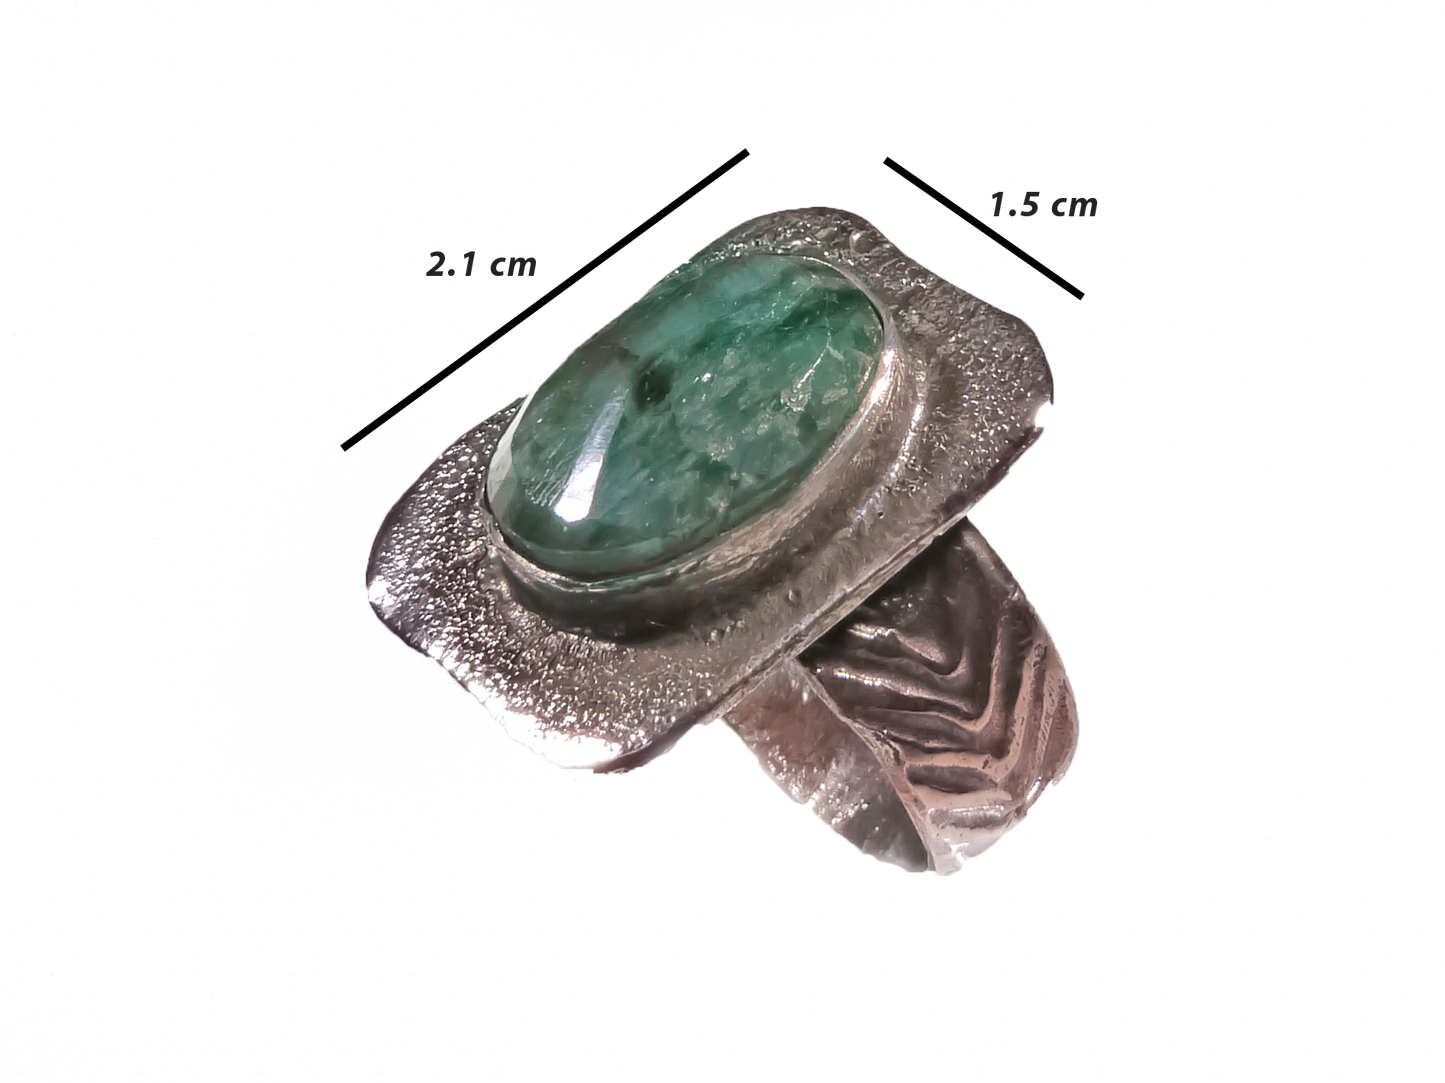 Emerald - Handmade 925 Sterling Silver Copper Ring